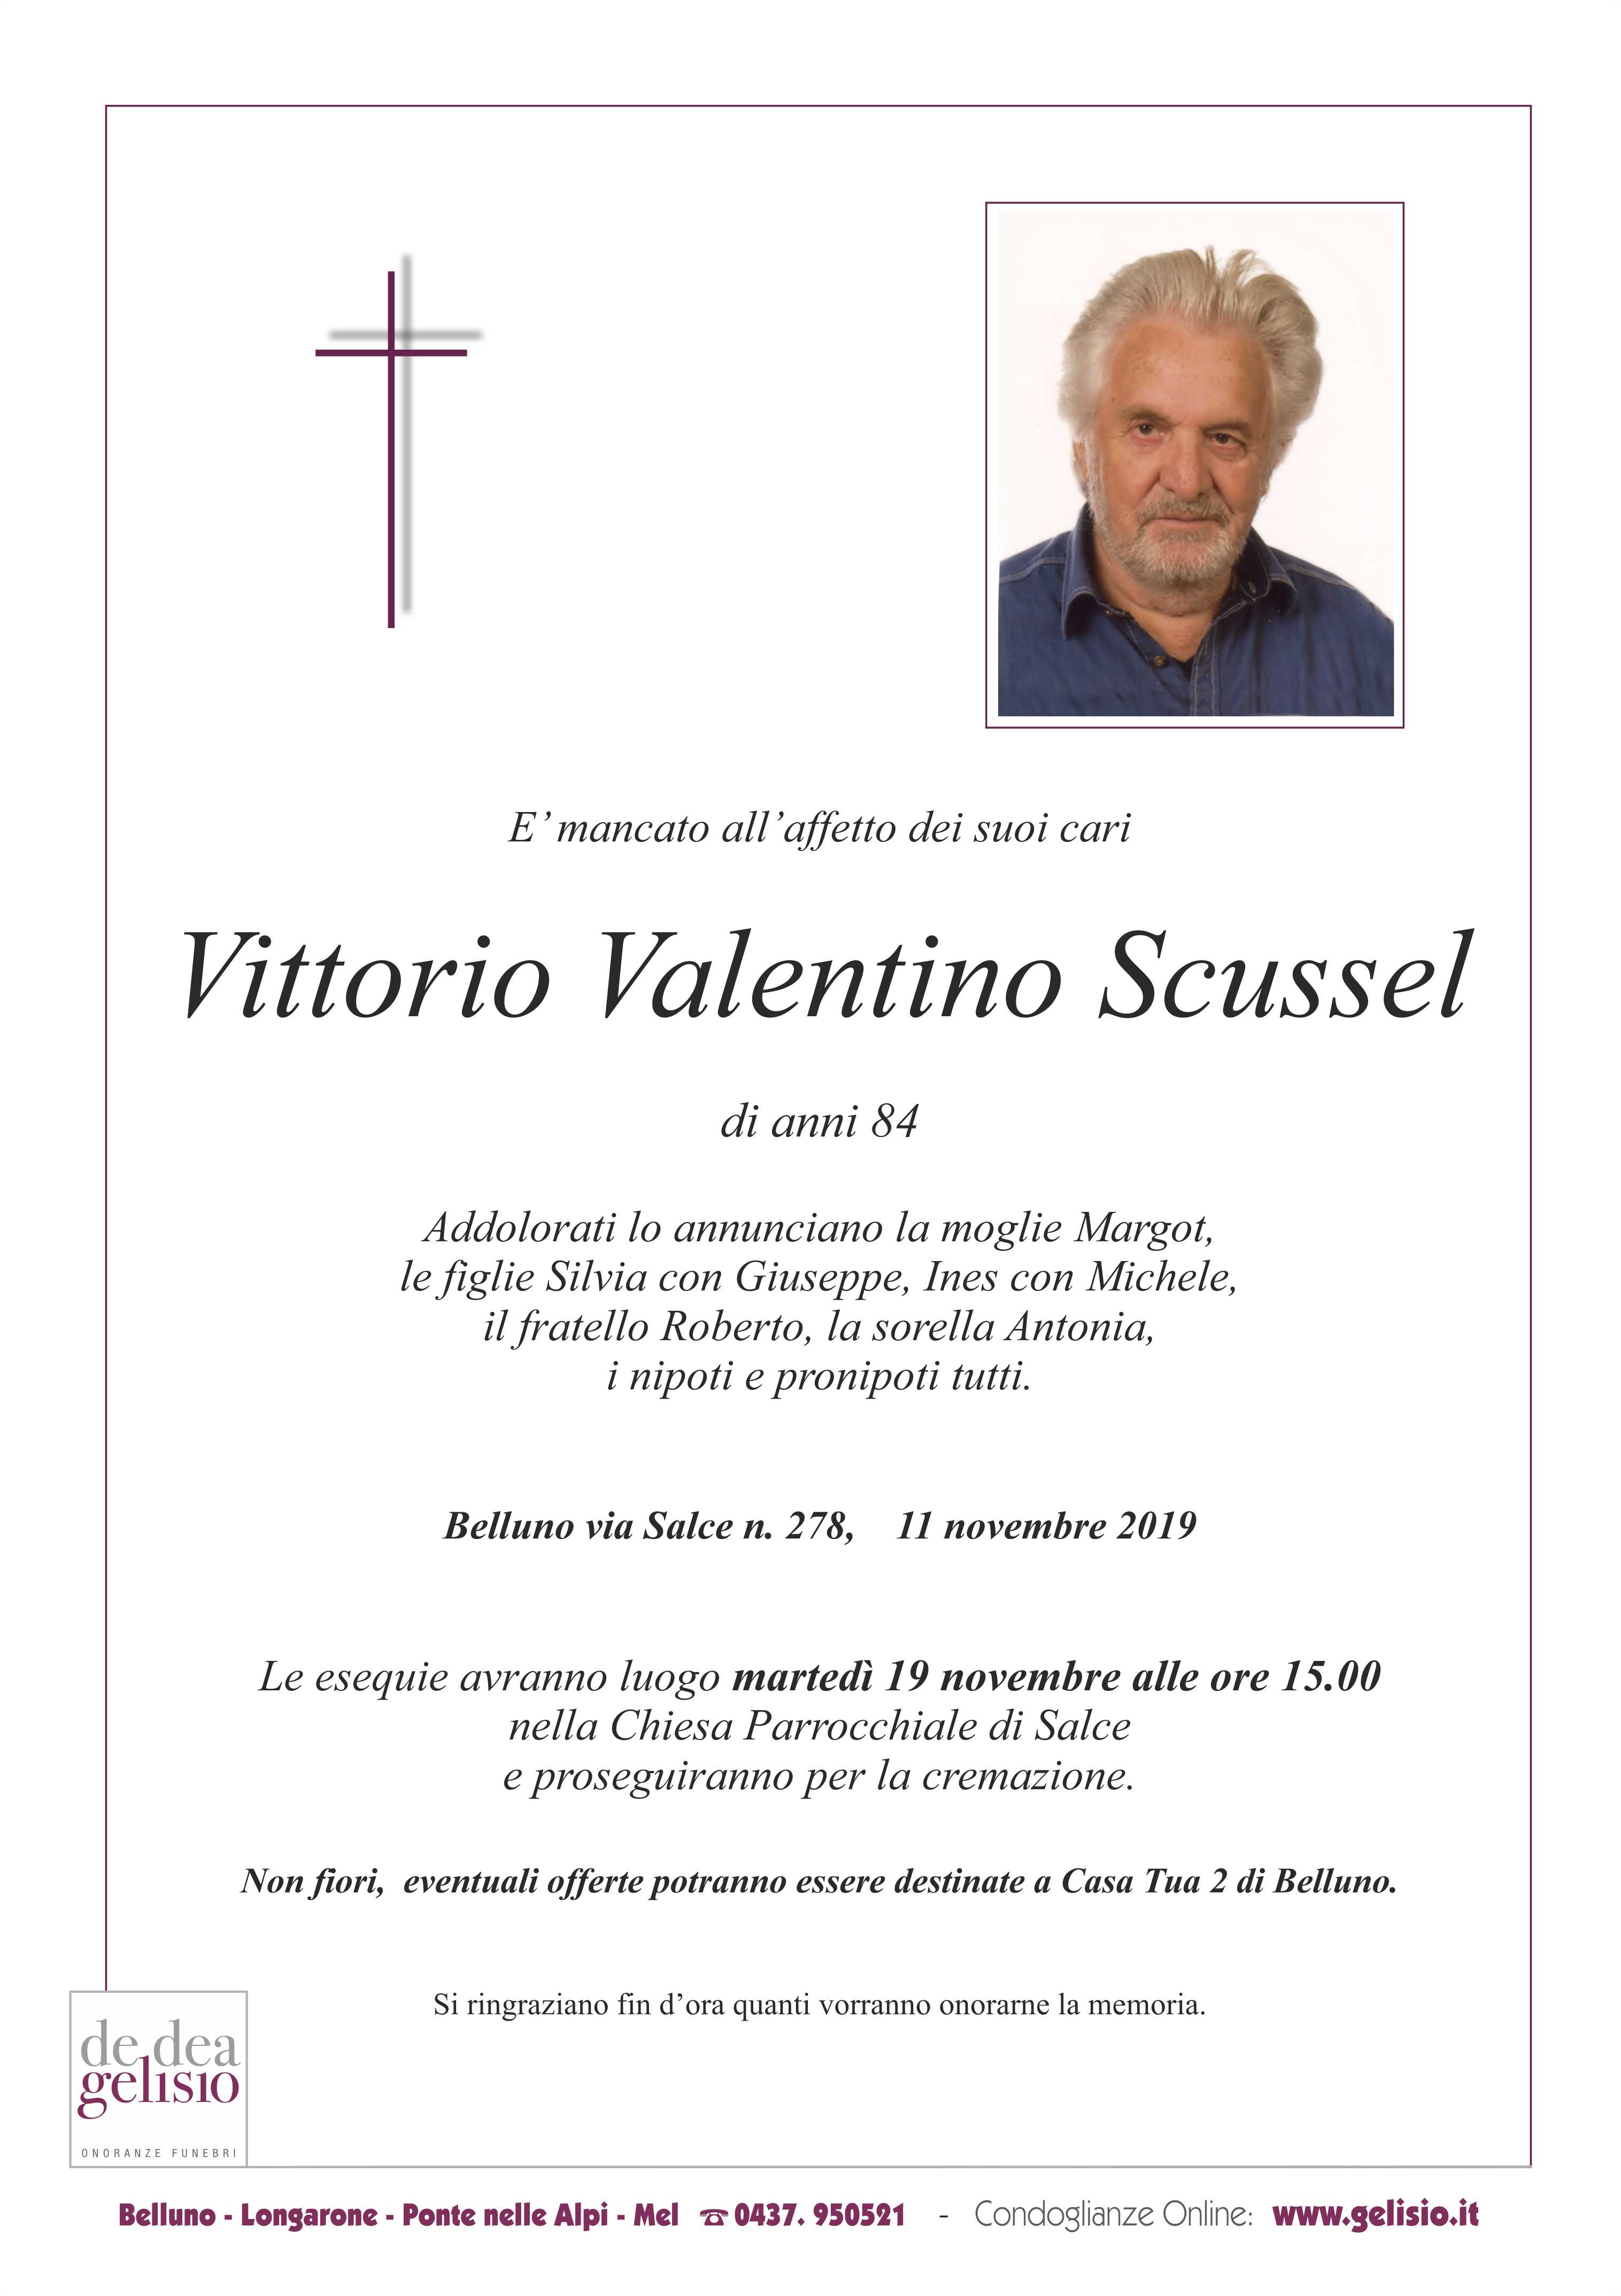 Scussel Vittorio Valentino